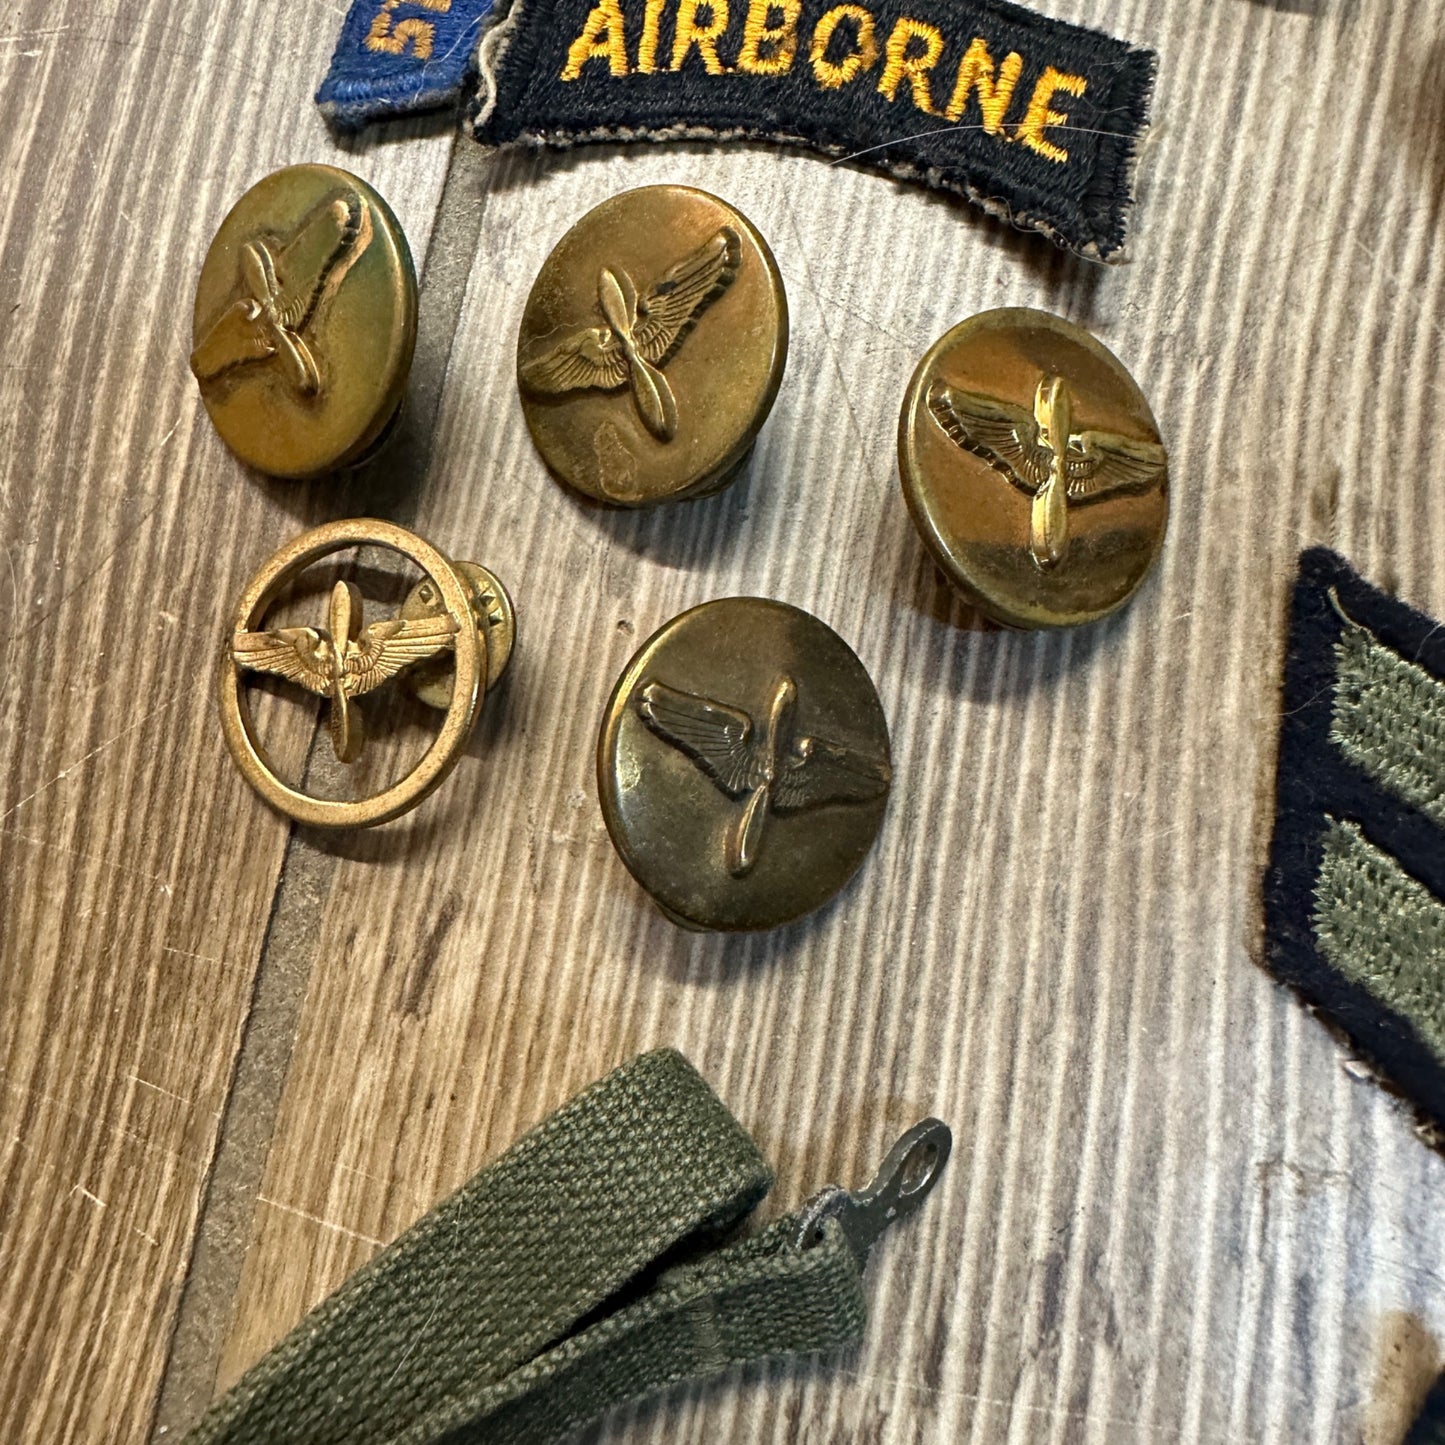 Huge Lot of World War II Vietnam War Era Patches Ranks Air Force Army WWII Pins